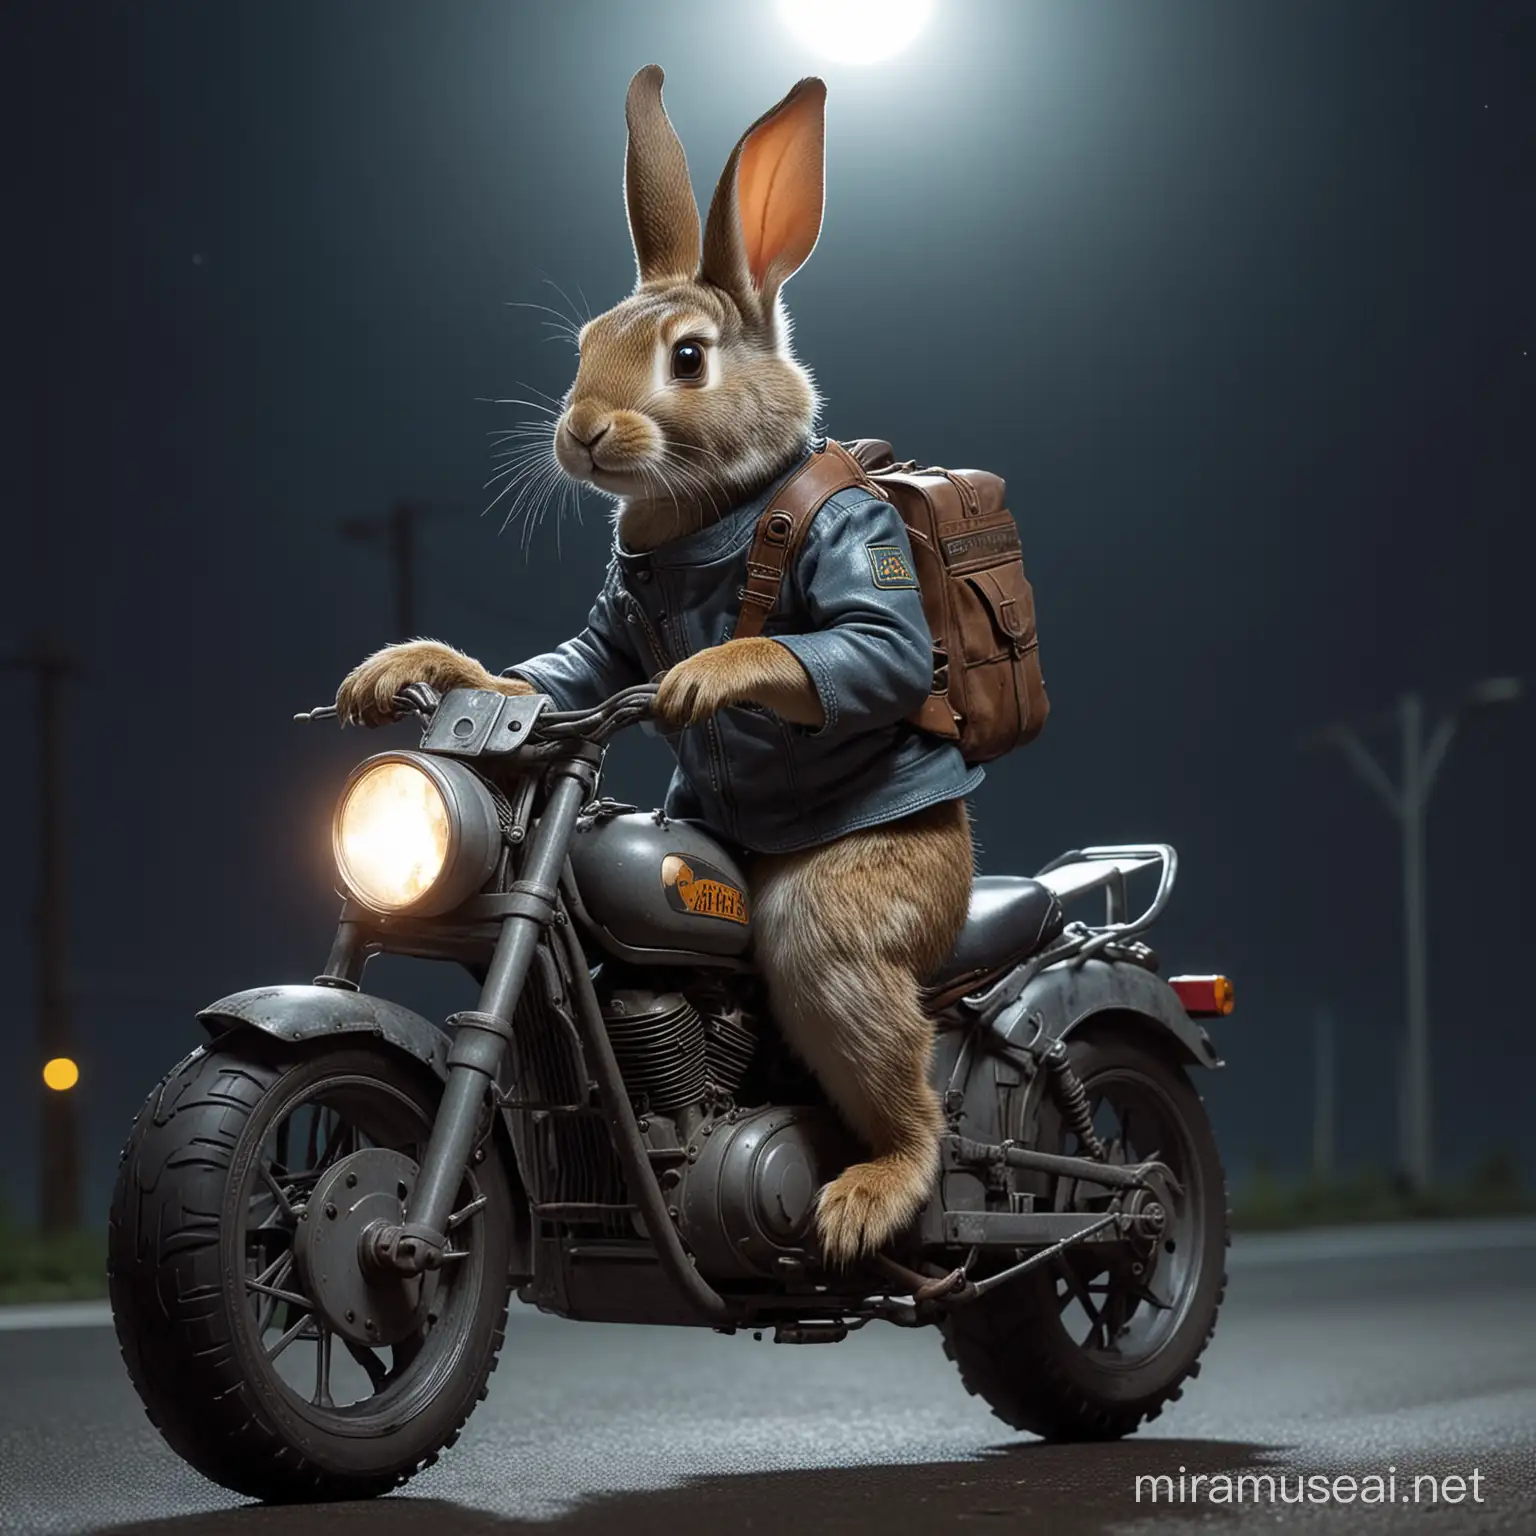 rabbit riding a motor bike at night